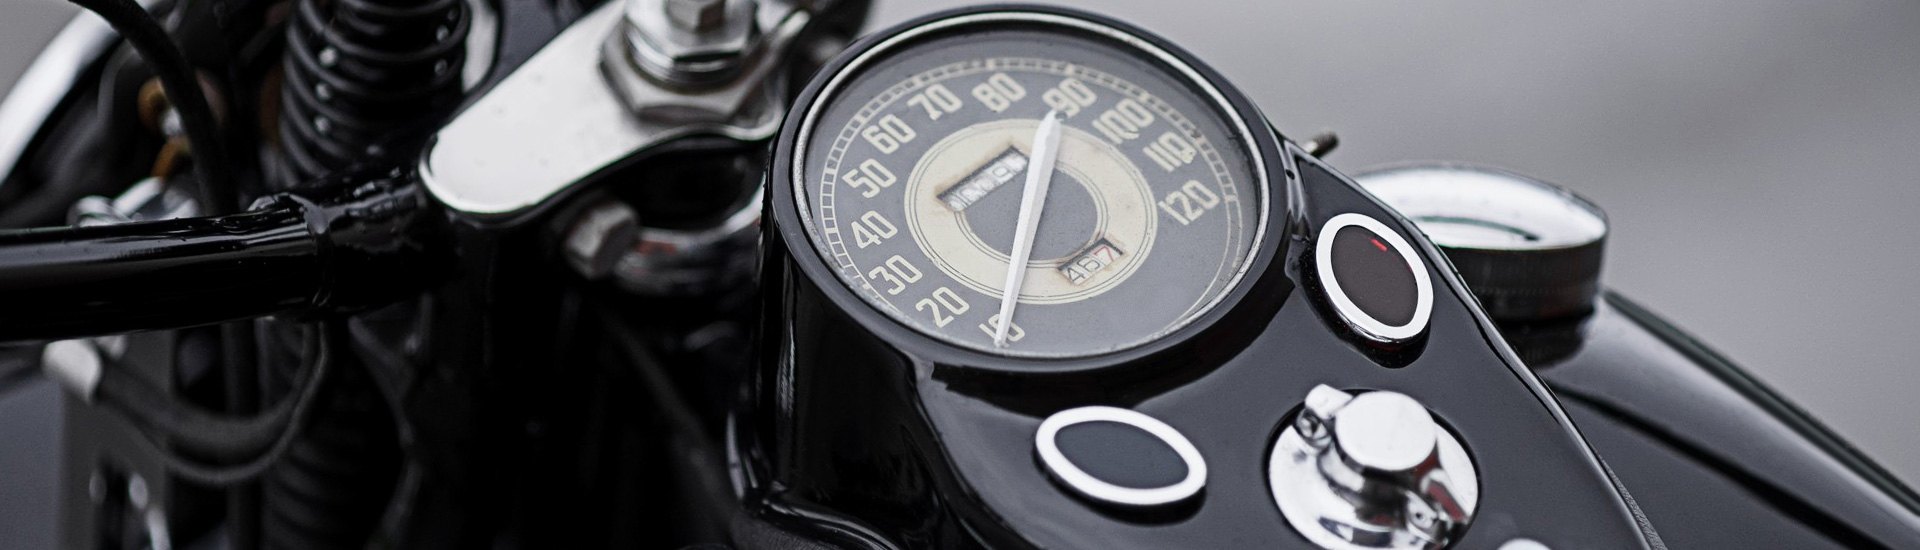 Harley Davidson Breakout Dashboard Gauges Speedometers Tachometers Motorcycleid Com